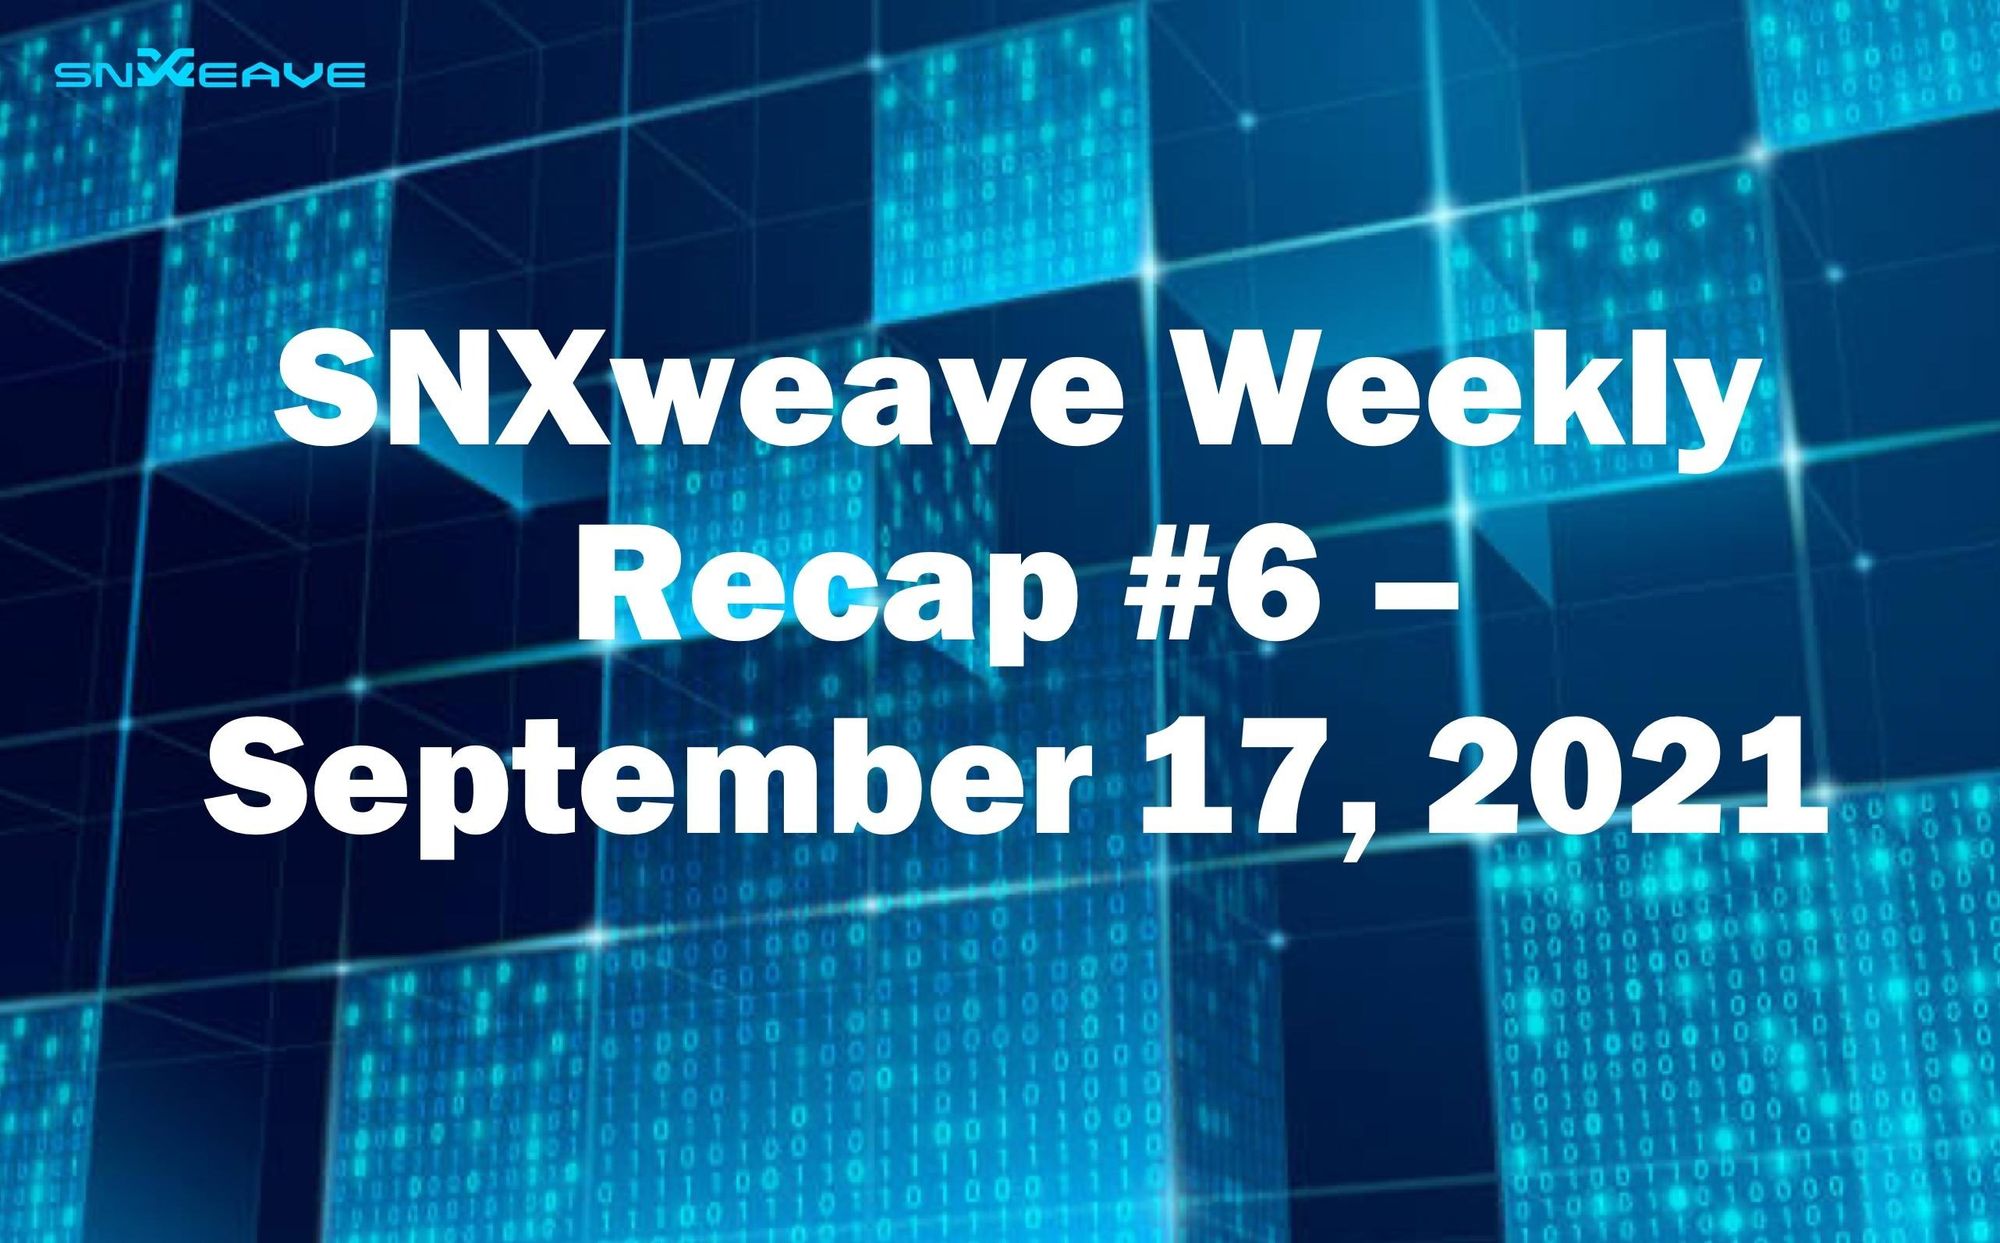 SNXweave Weekly Recap 6